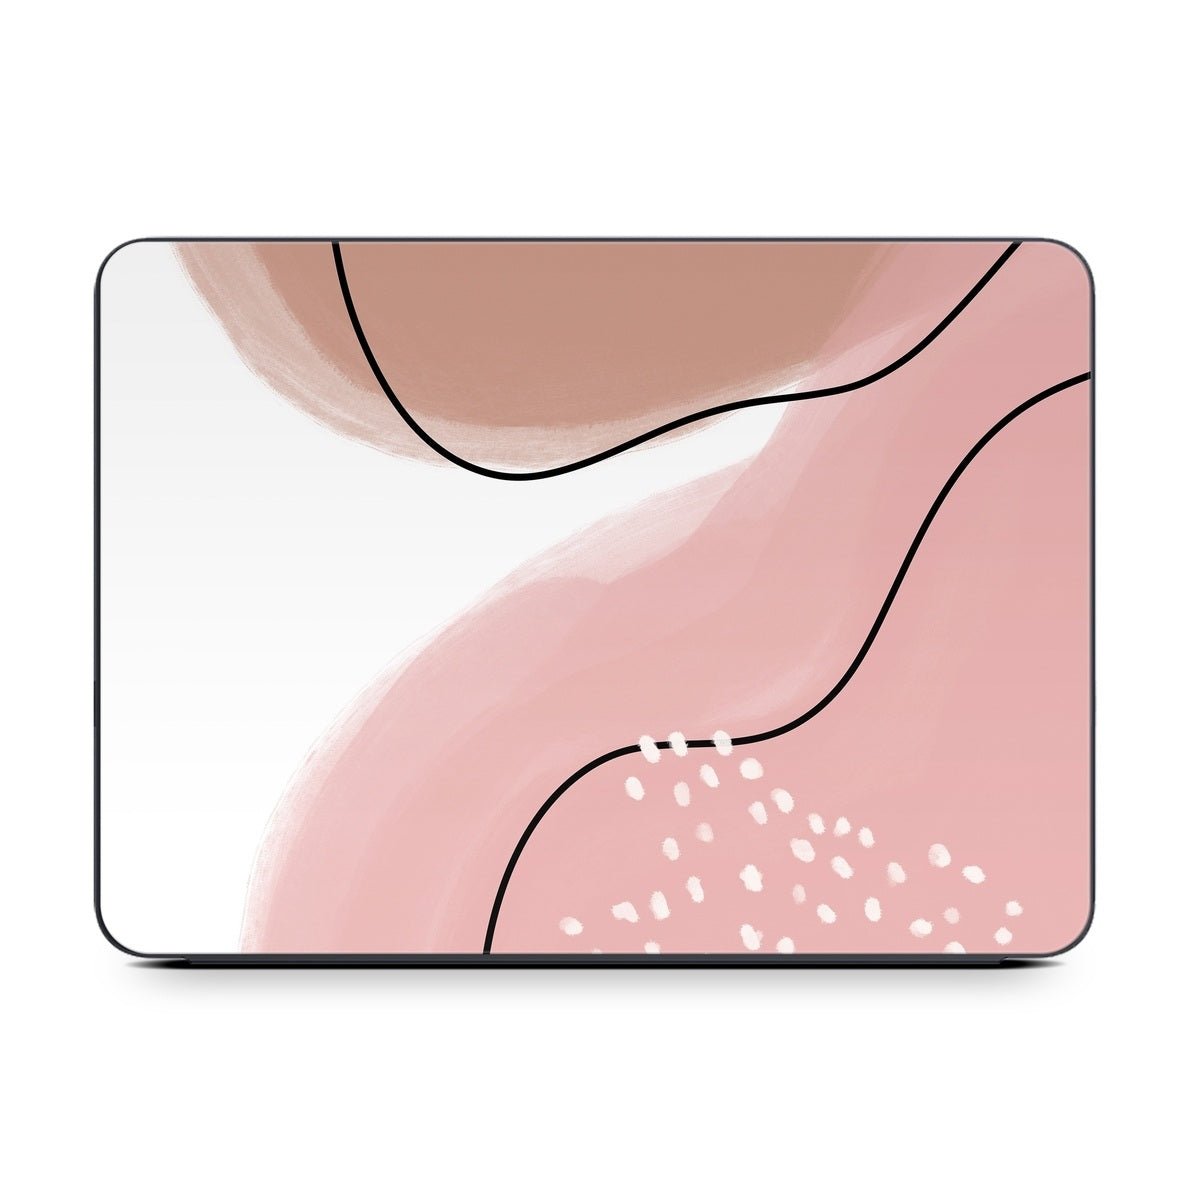 Abstract Pink and Brown - Apple Smart Keyboard Folio Skin - Aleeya Marie Designs - DecalGirl